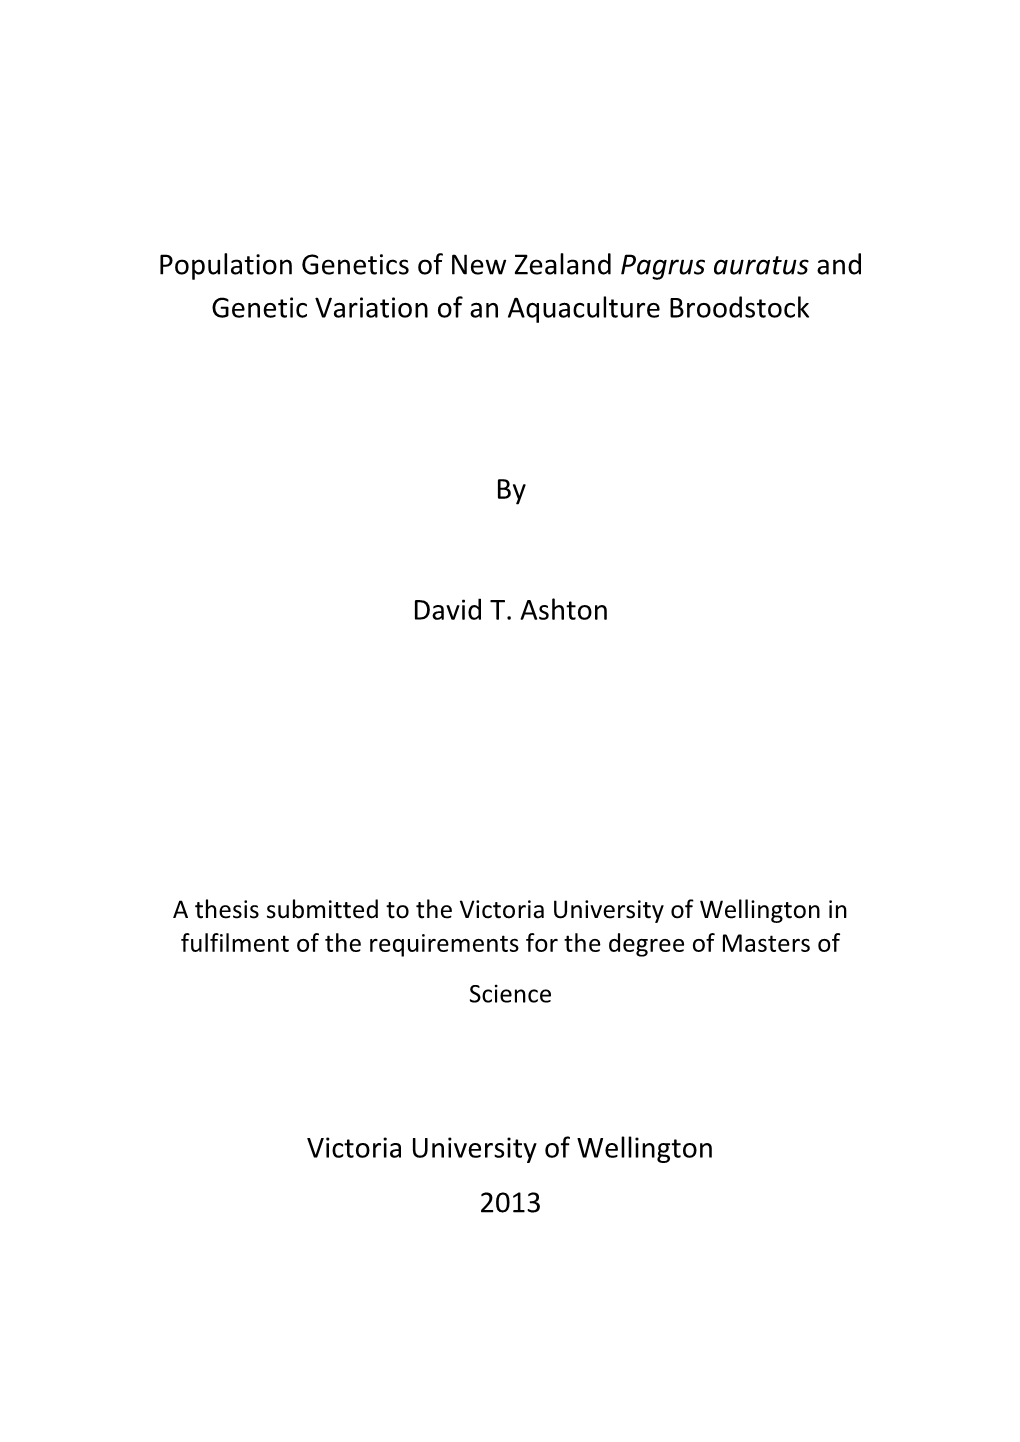 Population Genetics of New Zealand Pagrus Auratus and Genetic Variation of an Aquaculture Broodstock